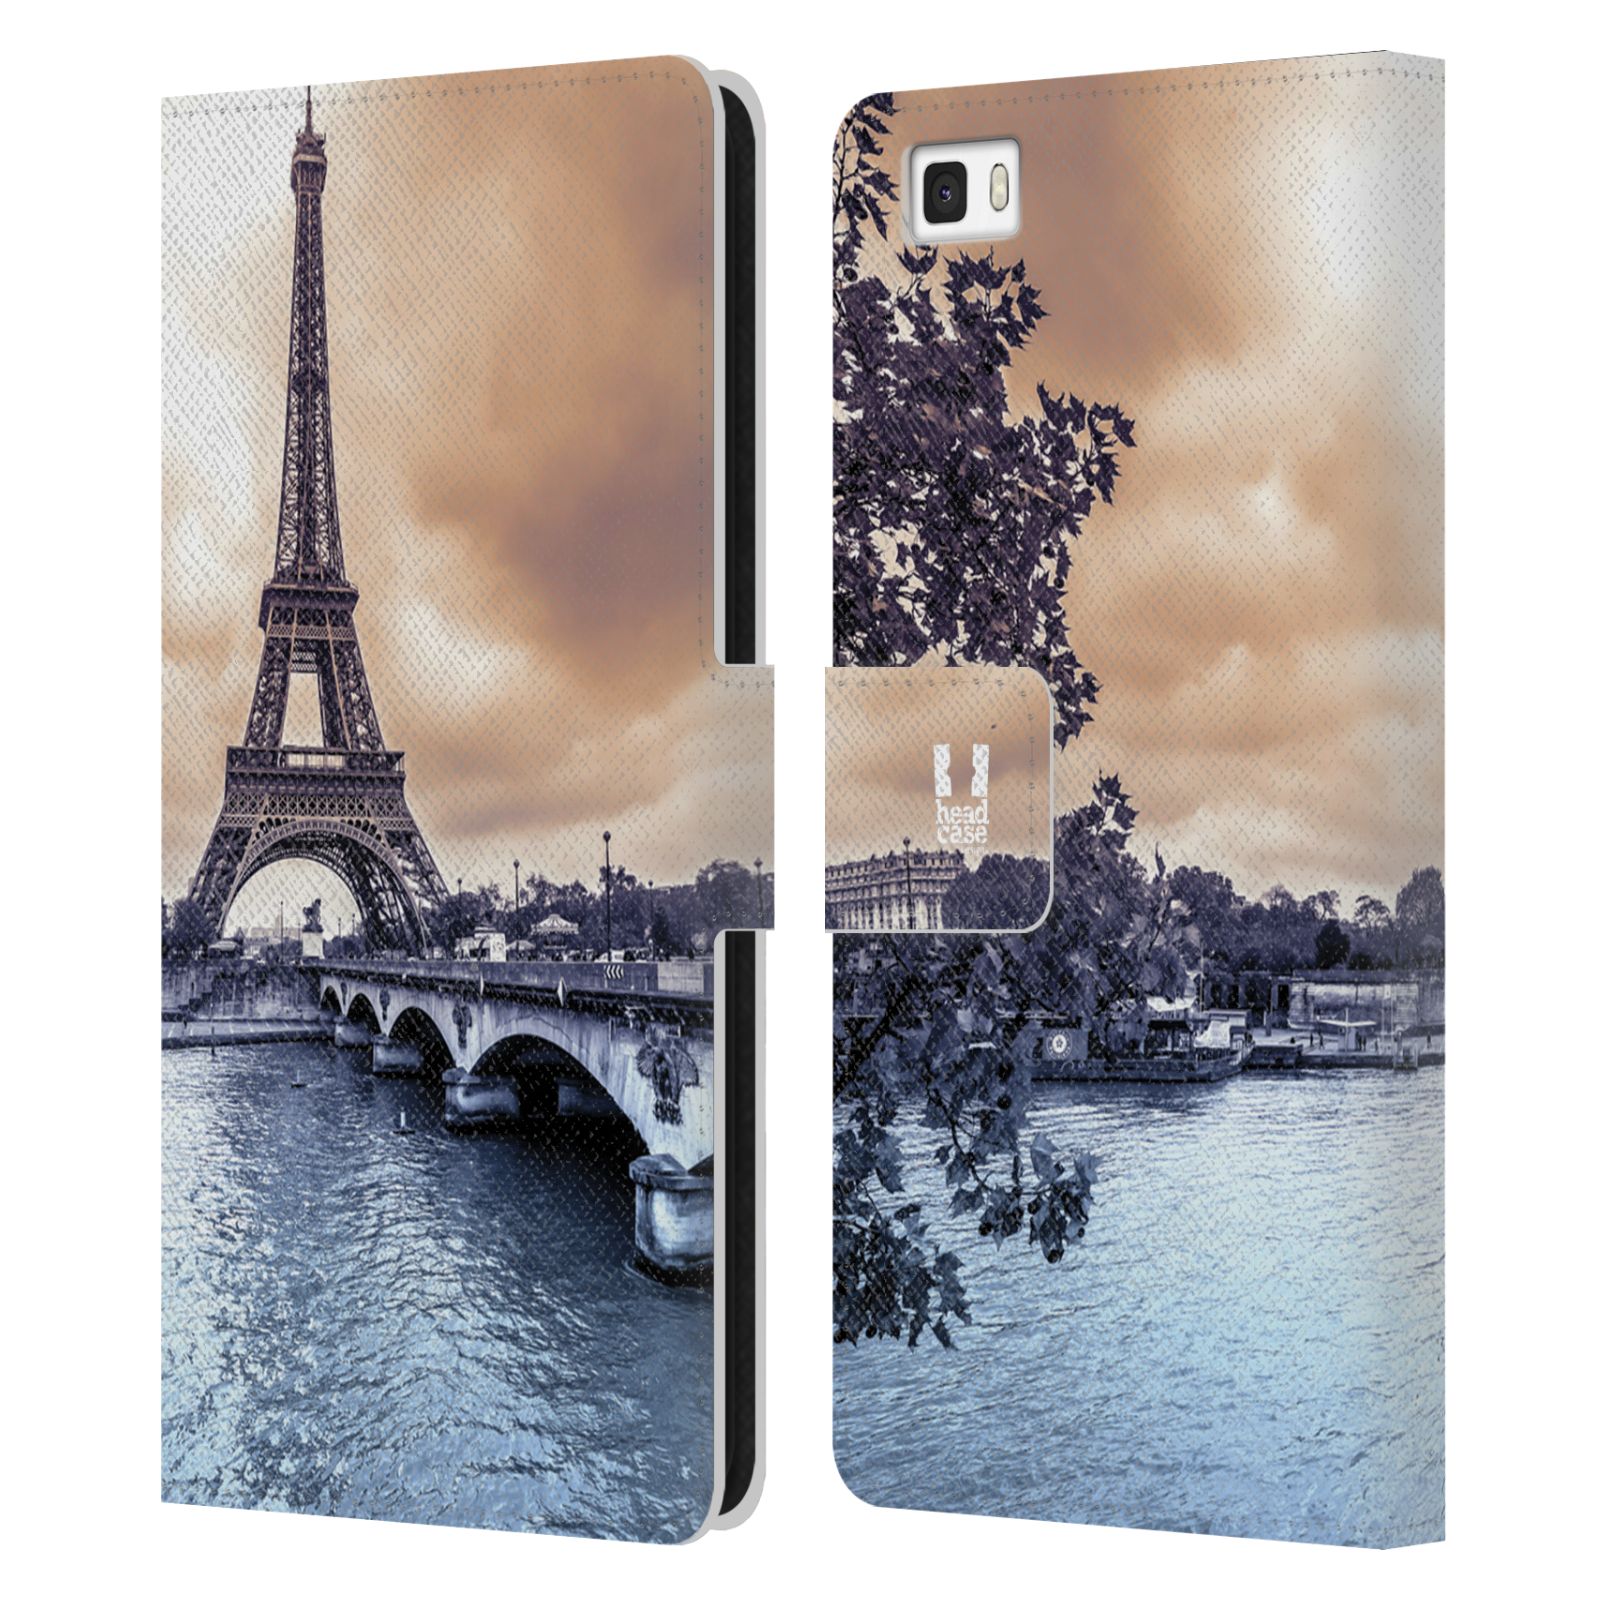 Pouzdro pro mobil Huawei P8 LITE - Eiffelova věž Paříž - Francie